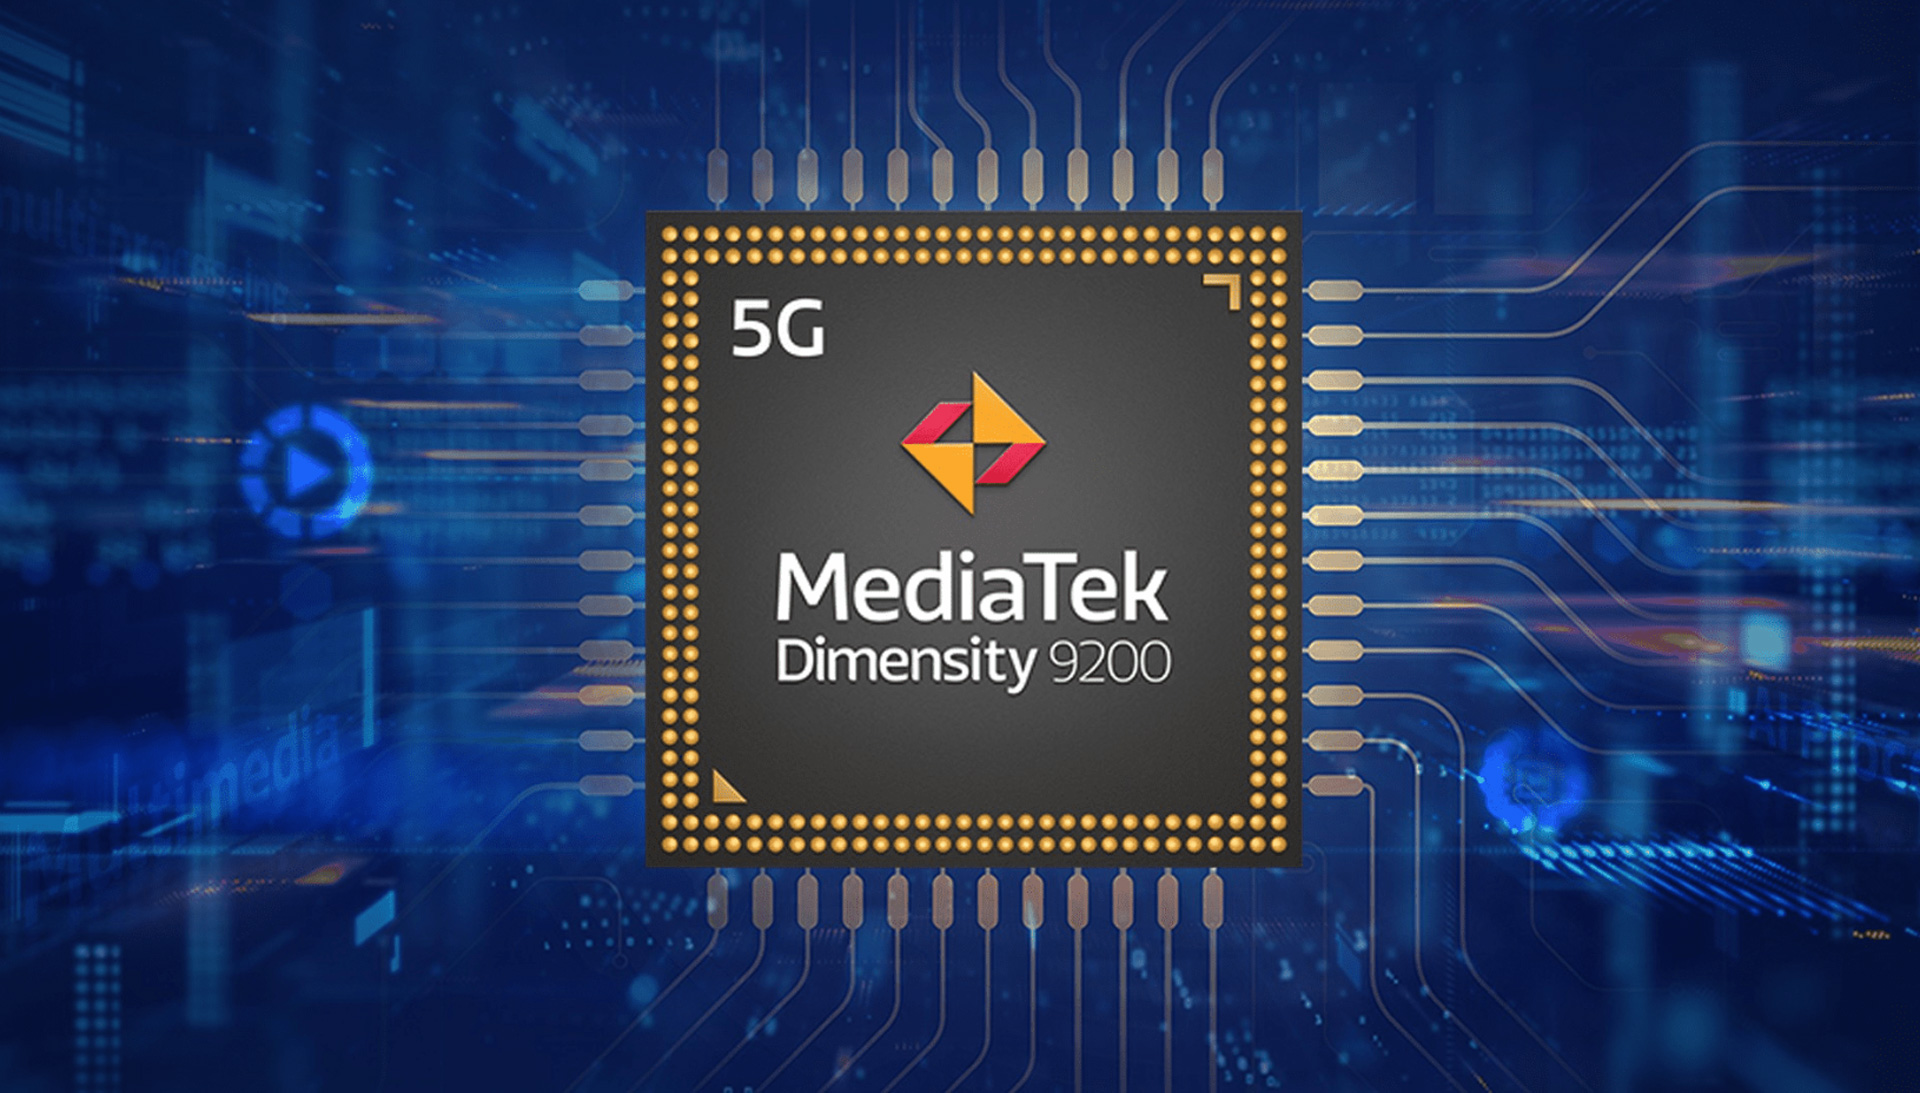 MediaTek Dimensity 9200 announced